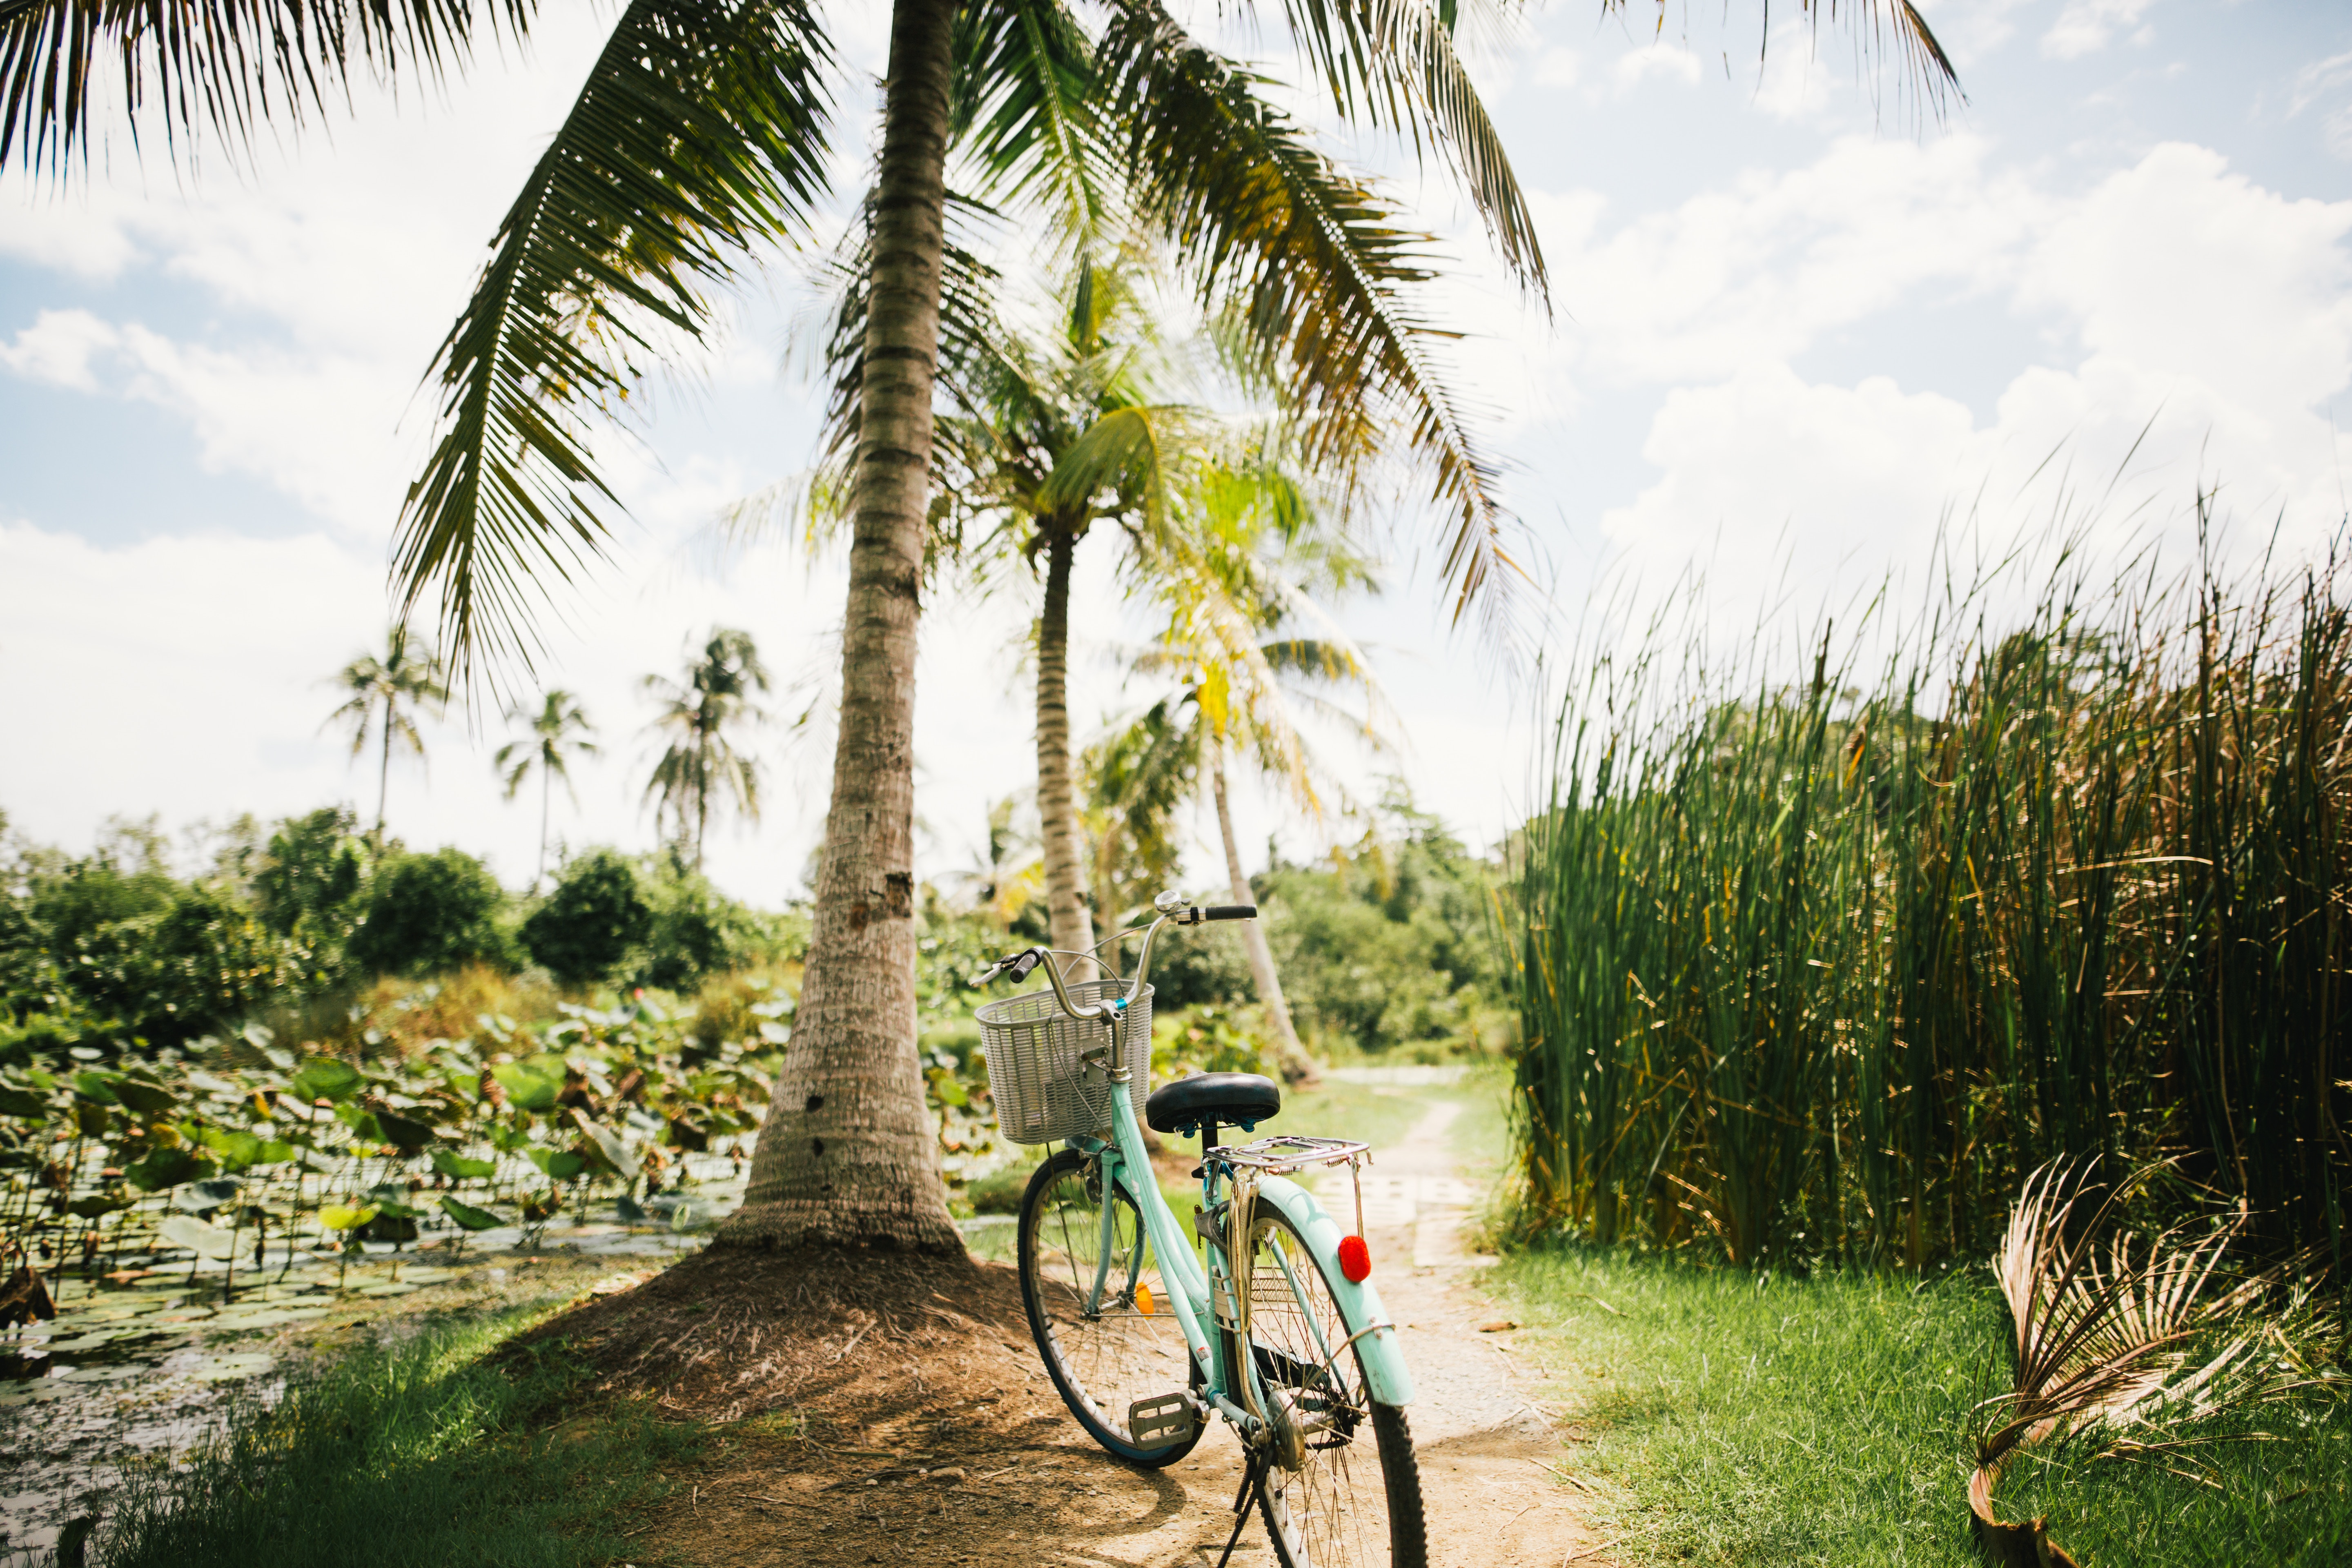 tropics, palms, miscellanea, miscellaneous, sunlight, bicycle